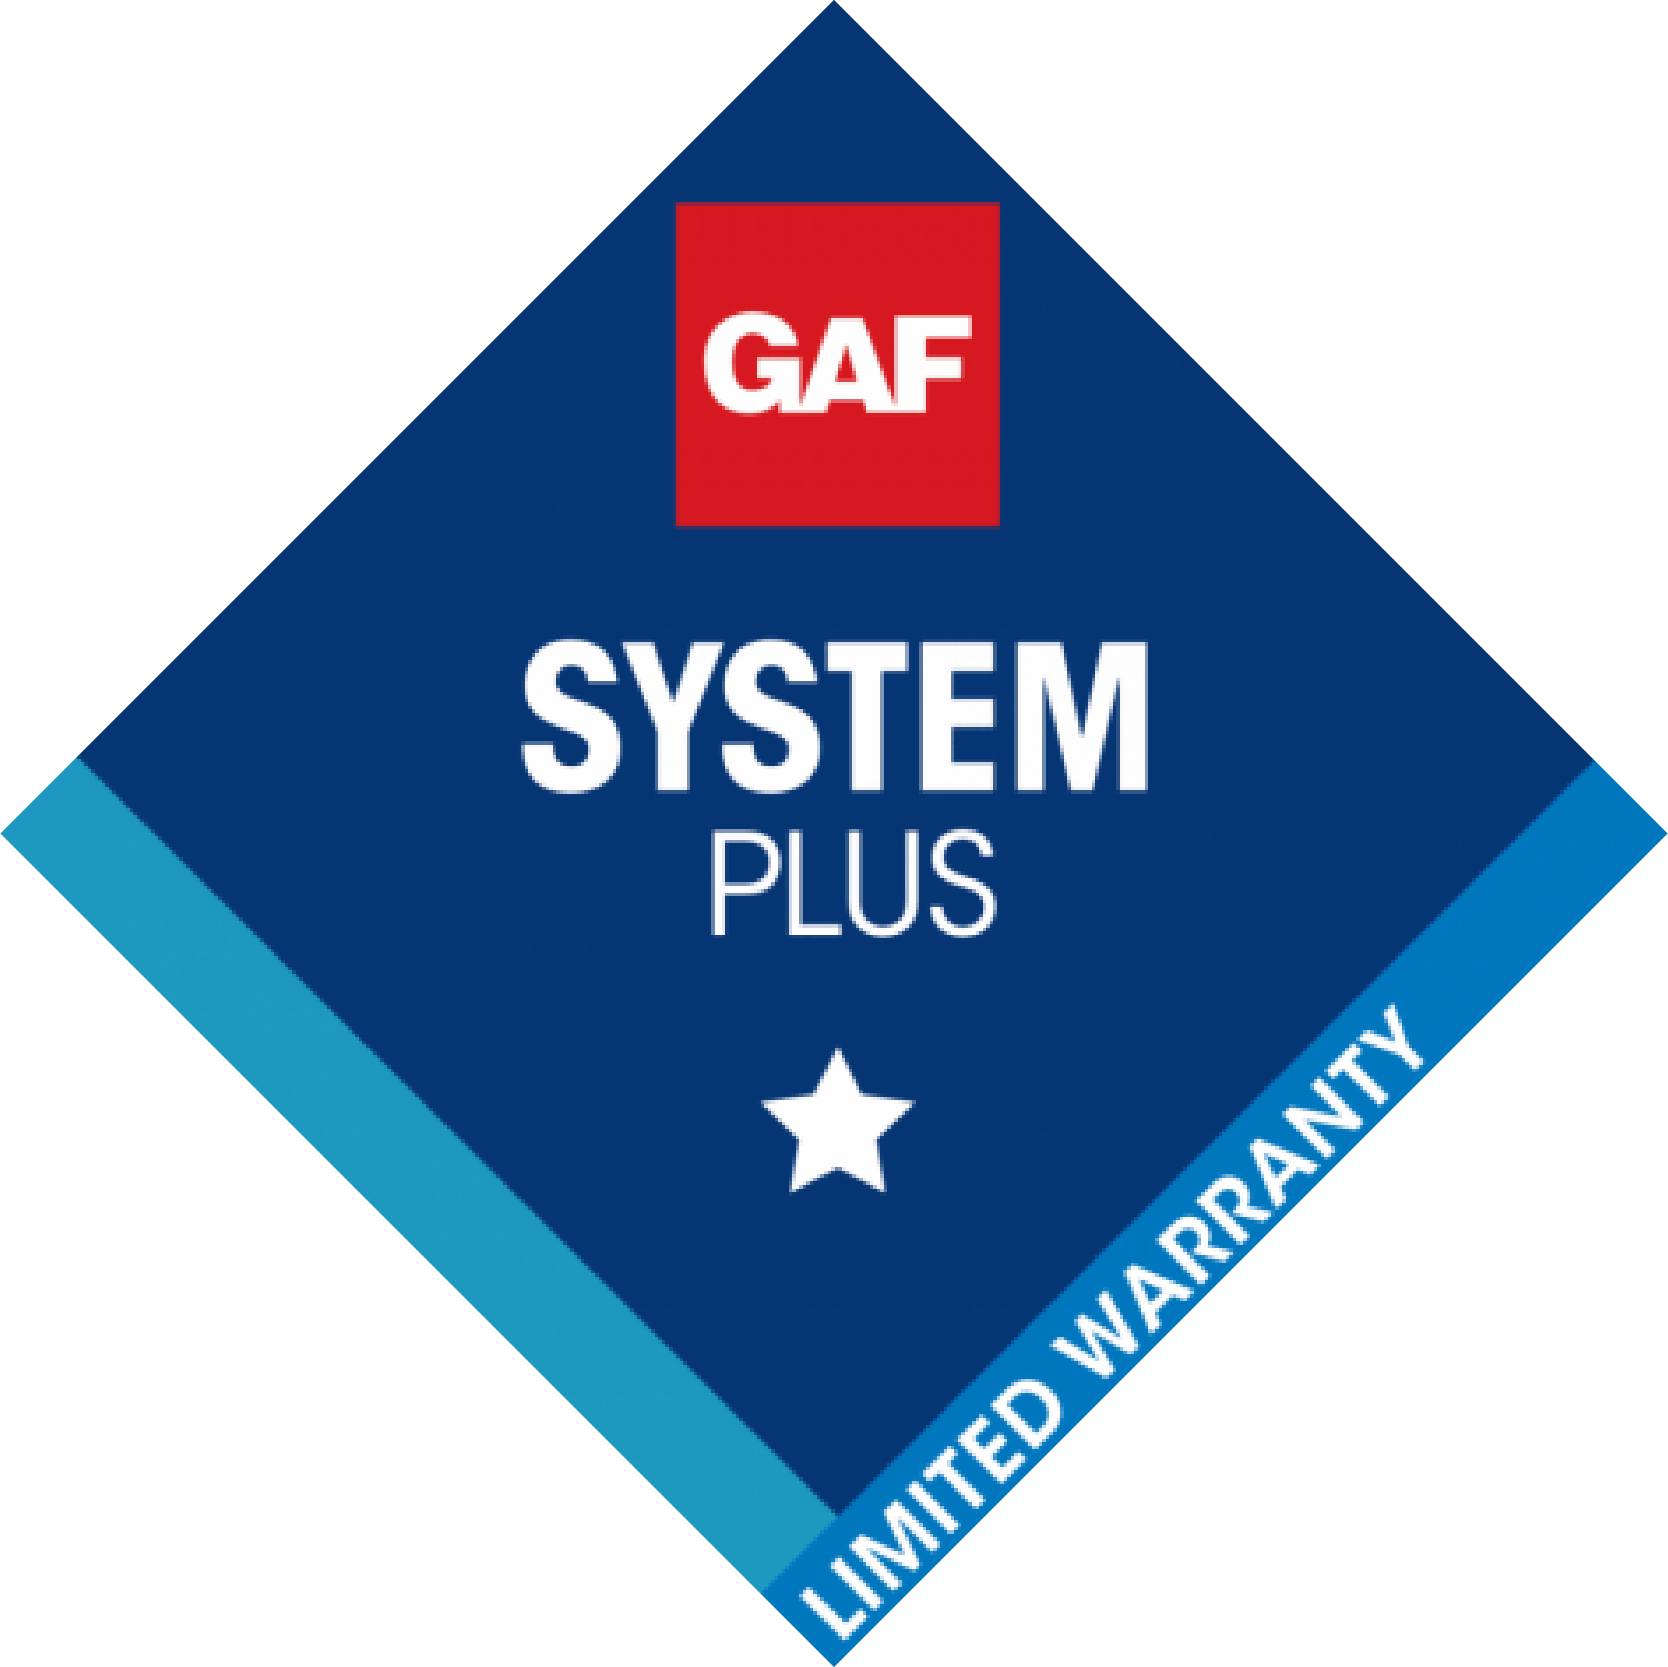 GAF System Plus Roof Warranty Seal